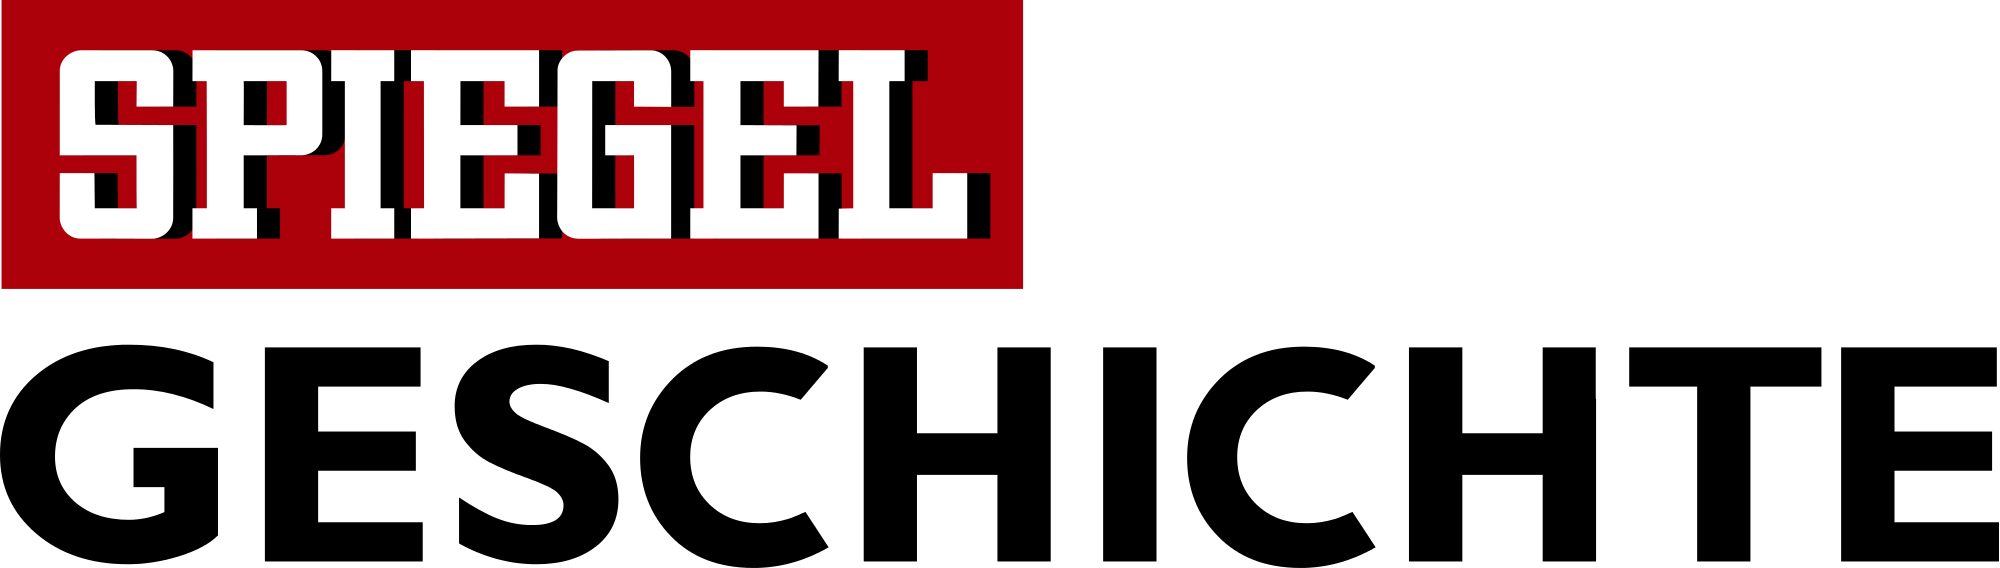 spiegel-geschichte-logo.png (30 KB)